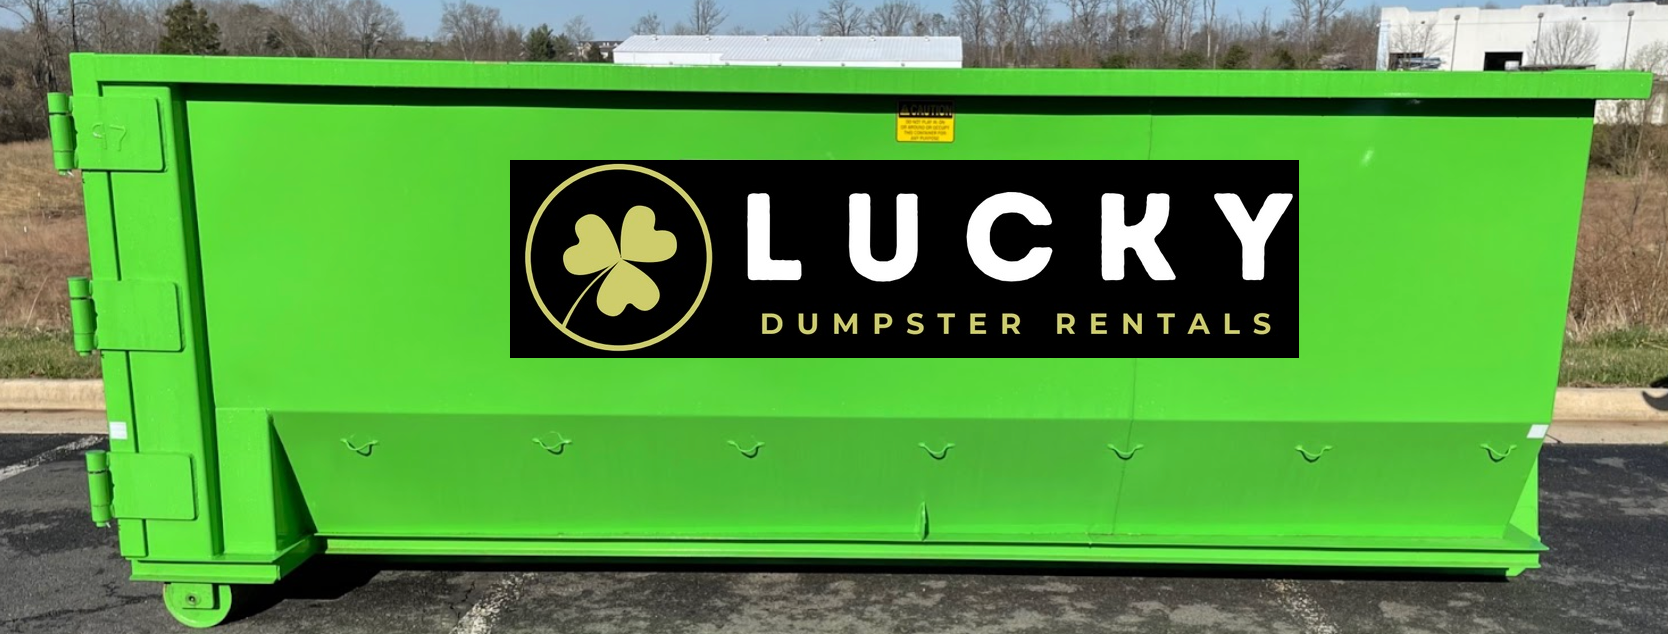 Tyrone Dumpster Rental - Lucky Dumpster Rentals of Tyrone, GA